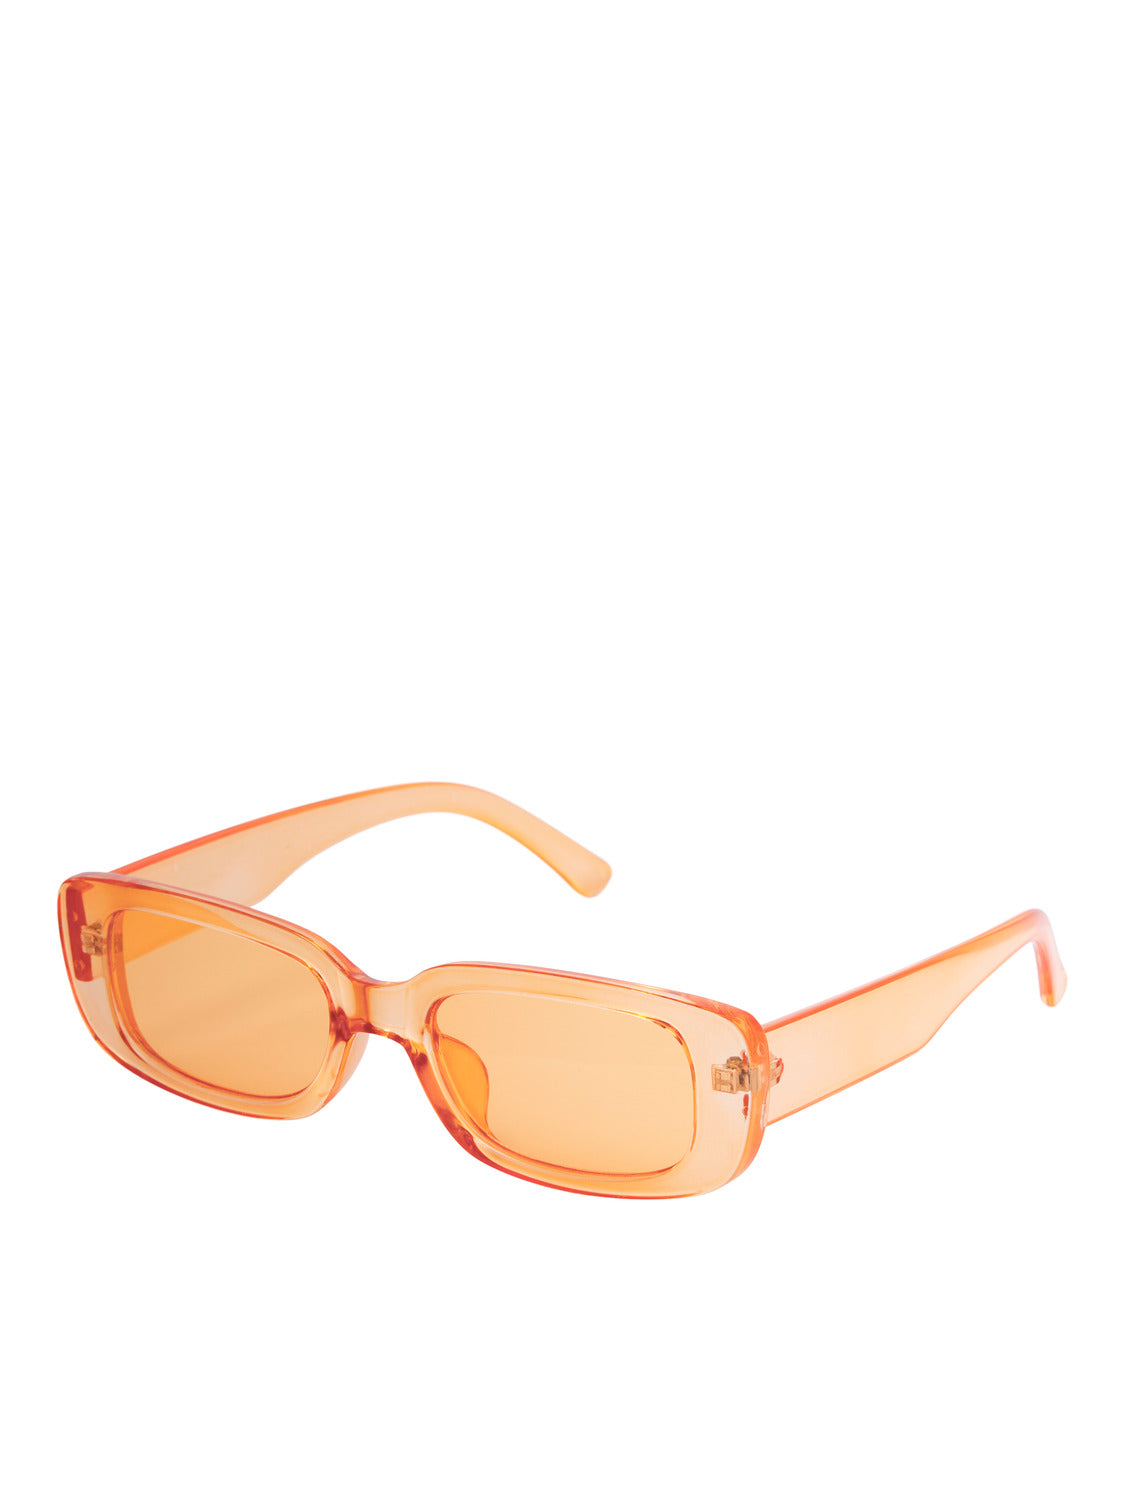 Gafas de sol JACABEL - Naranja